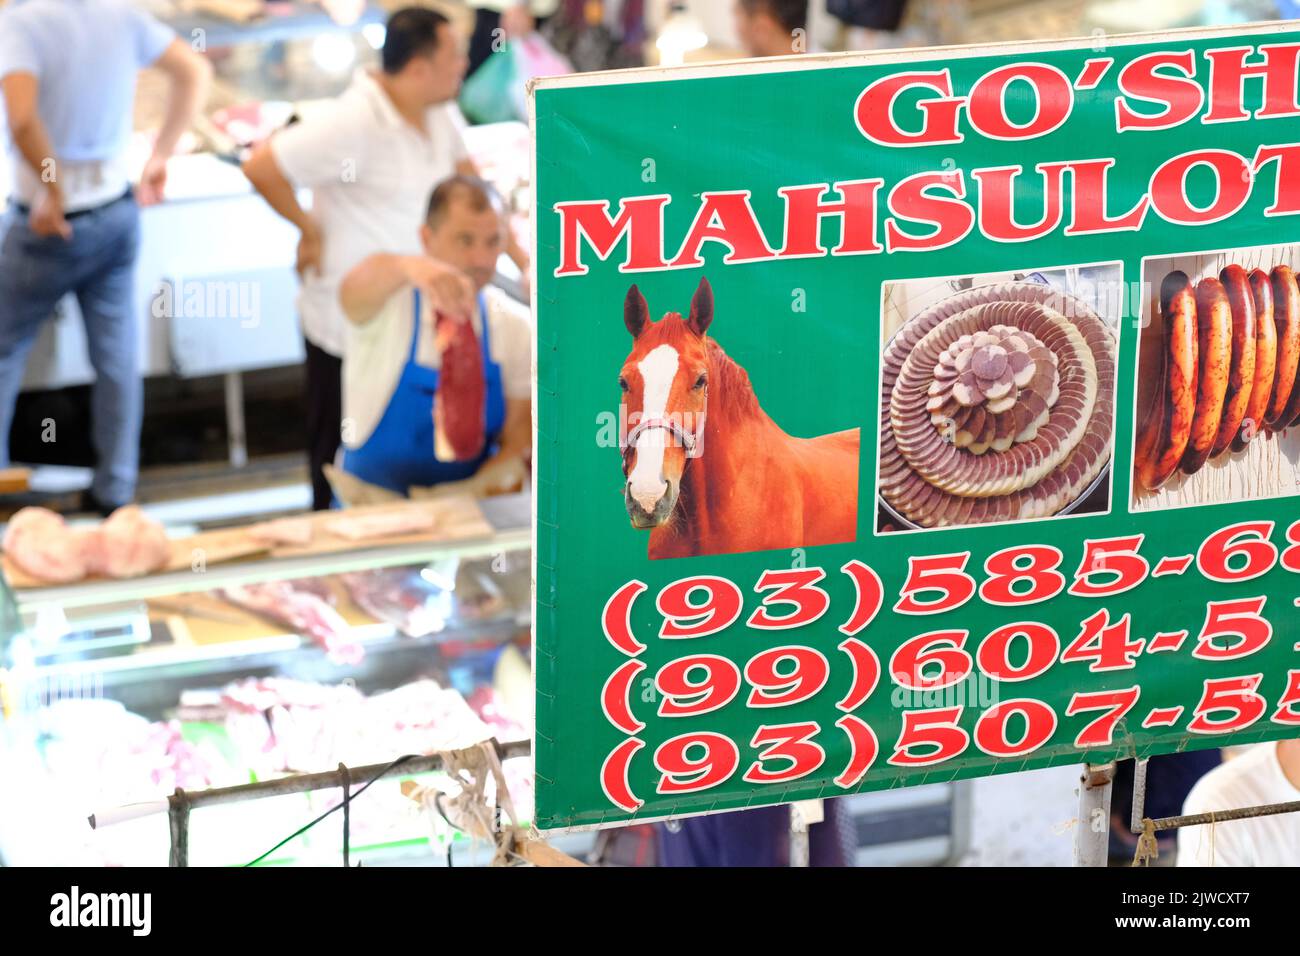 Chorsu Bazaar in Tashkent Uzbekistan - market traders selling horse meat at a butchers stall in August 2022 Stock Photo